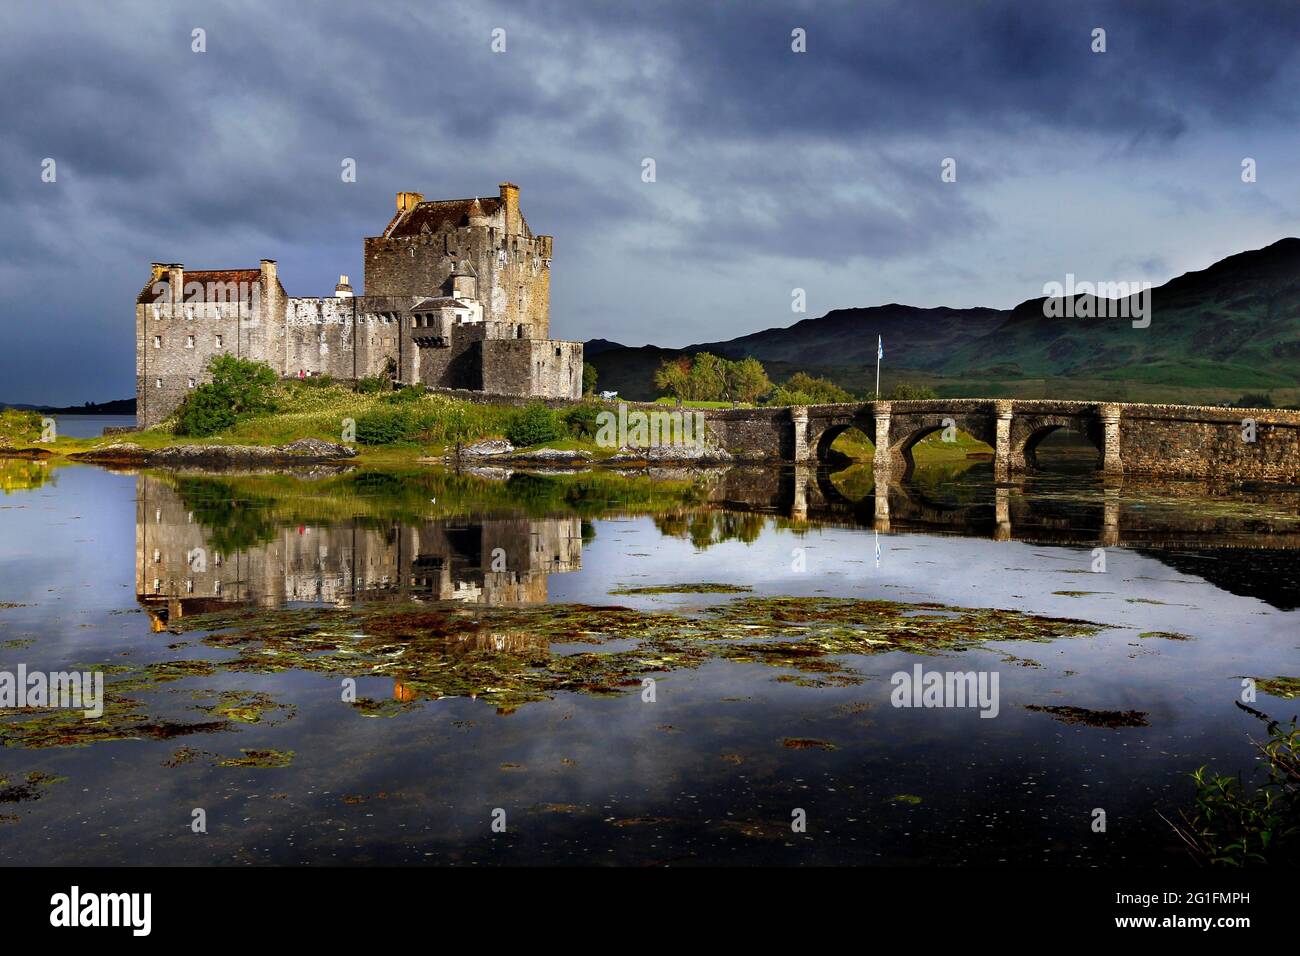 Loch, Castello di Eilean Donan, castello, punta, isola marea, Ponte pedonale in pietra, sedile ancestrale Clan Macrae, Loch Duich, Dornie, Highlands, Highlands Foto Stock